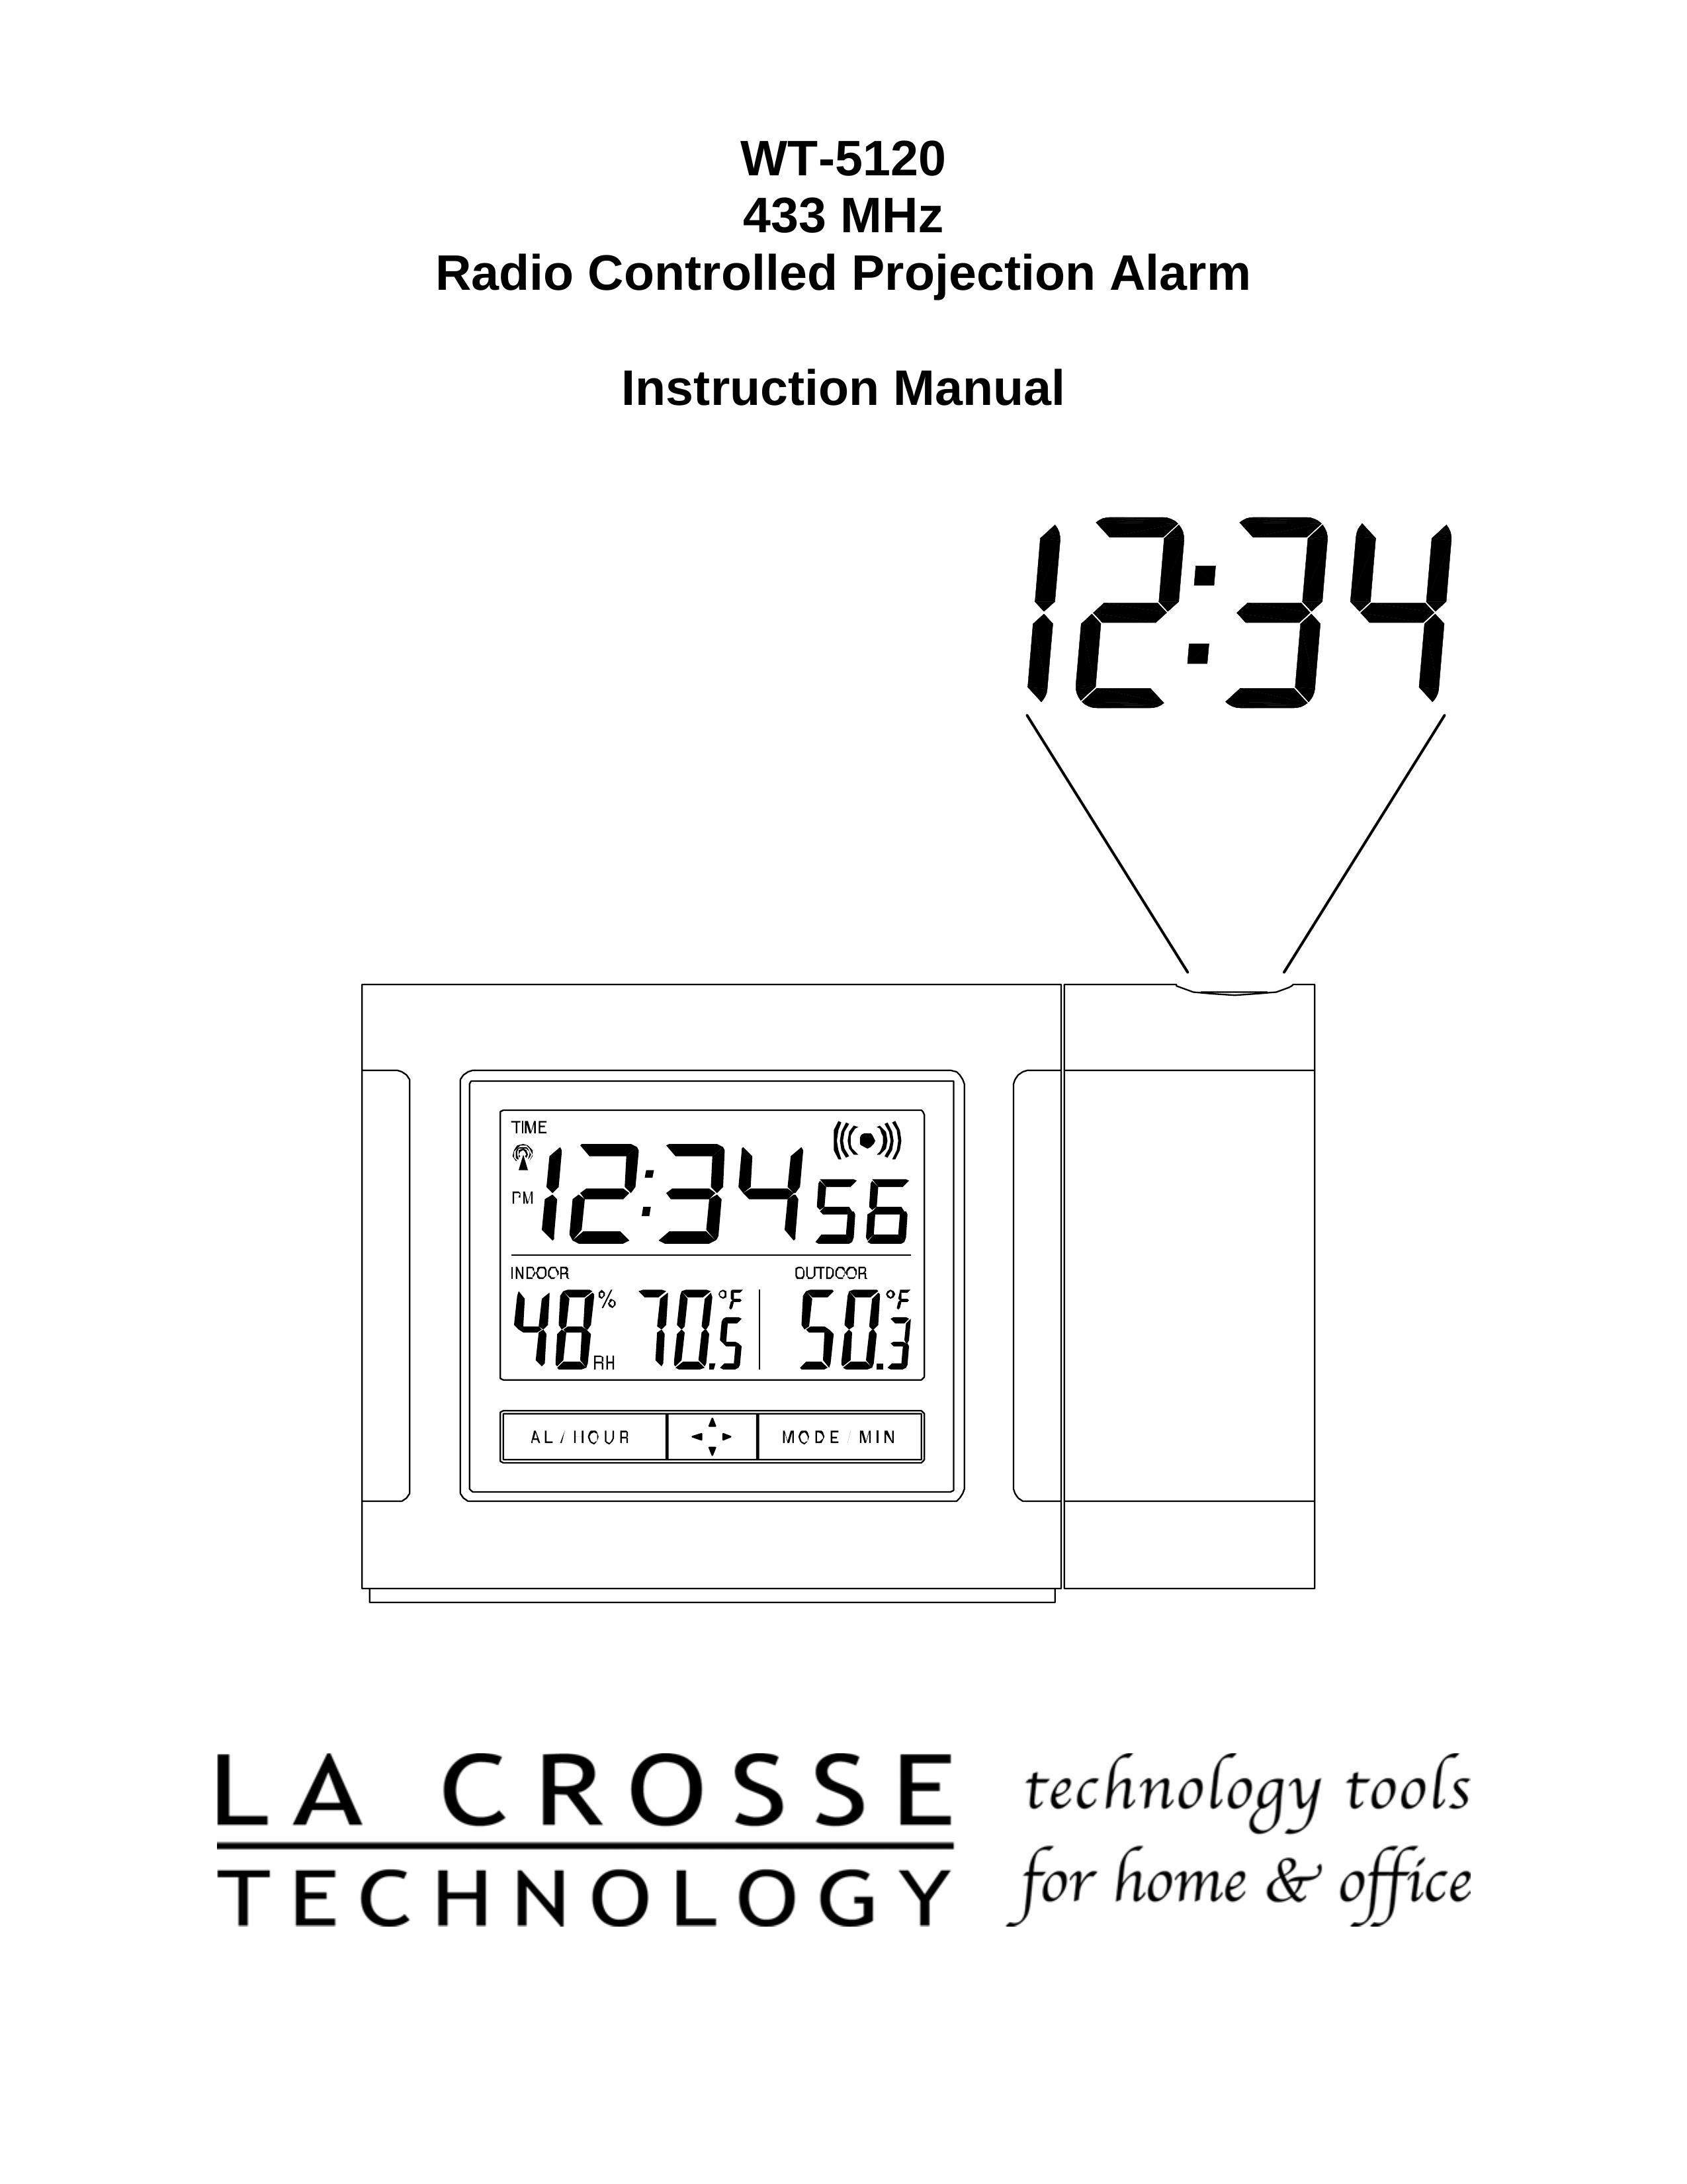 La Crosse Technology WT-5120 433 Clock Radio User Manual